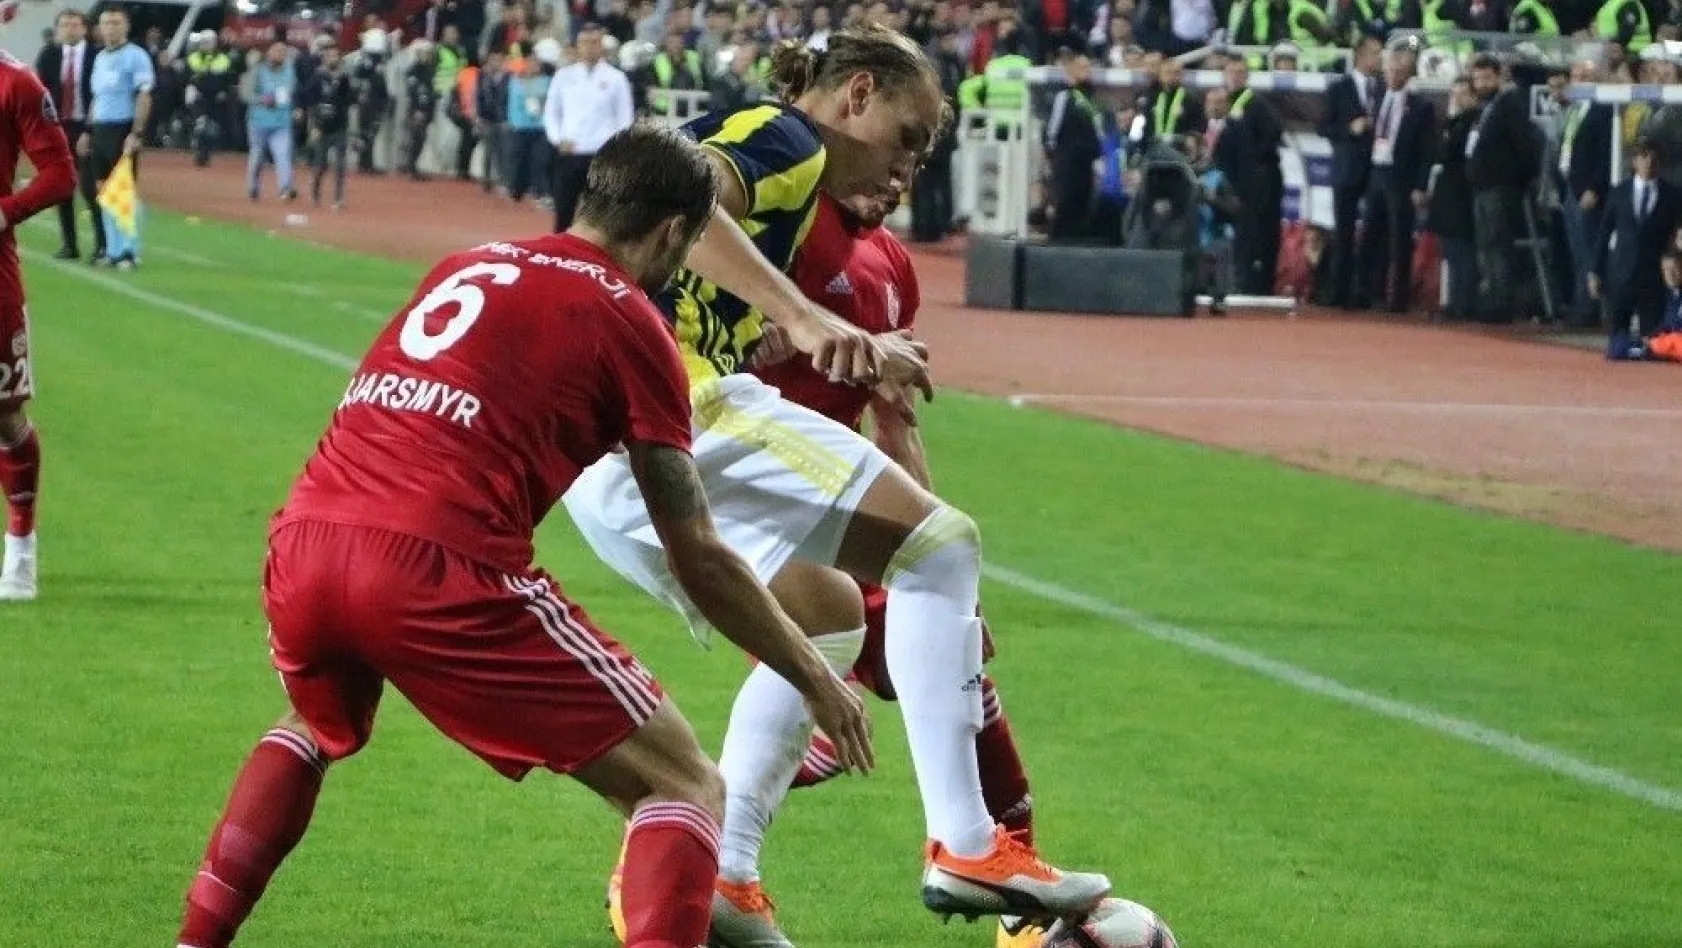 Spor Toto Süper Lig: DG Sivasspor: 0 - Fenerbahçe: 0 (Maç sonucu)
